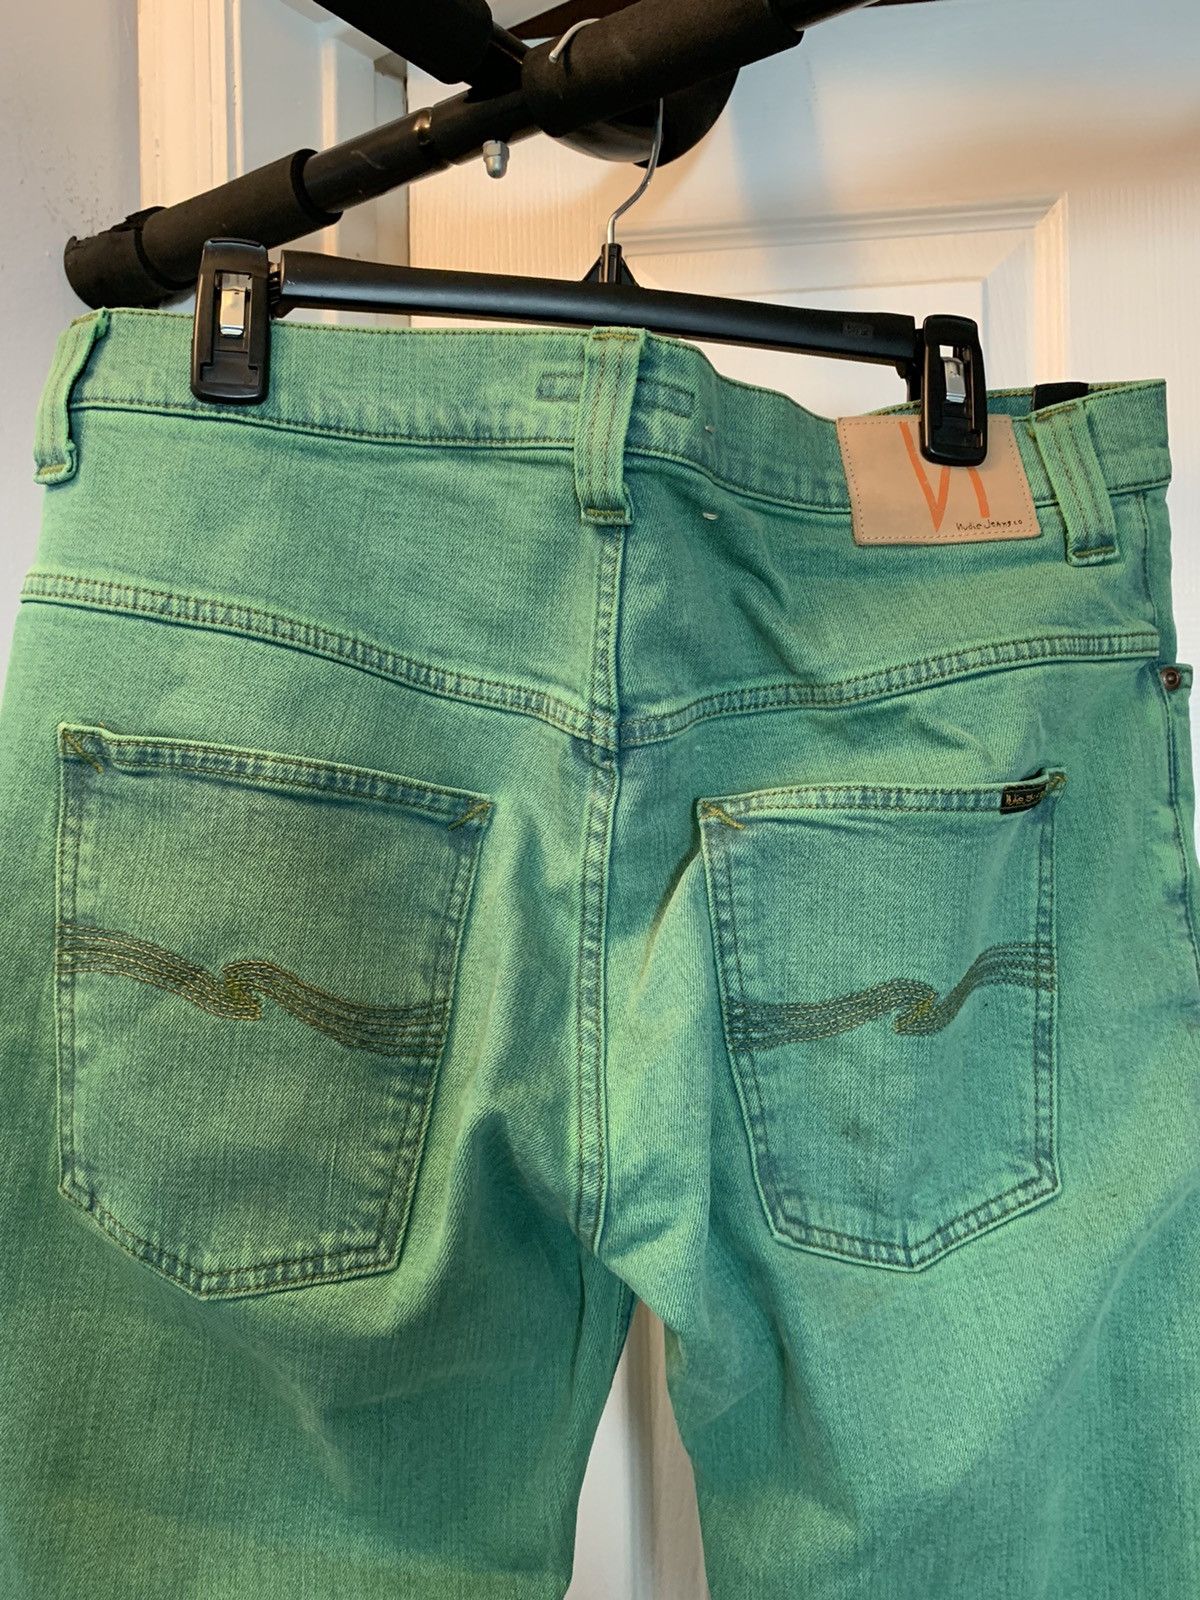 Nudie Jeans Nudie Jeans Green Denim Straight Jeans Size US 36 / EU 52 - 6 Thumbnail